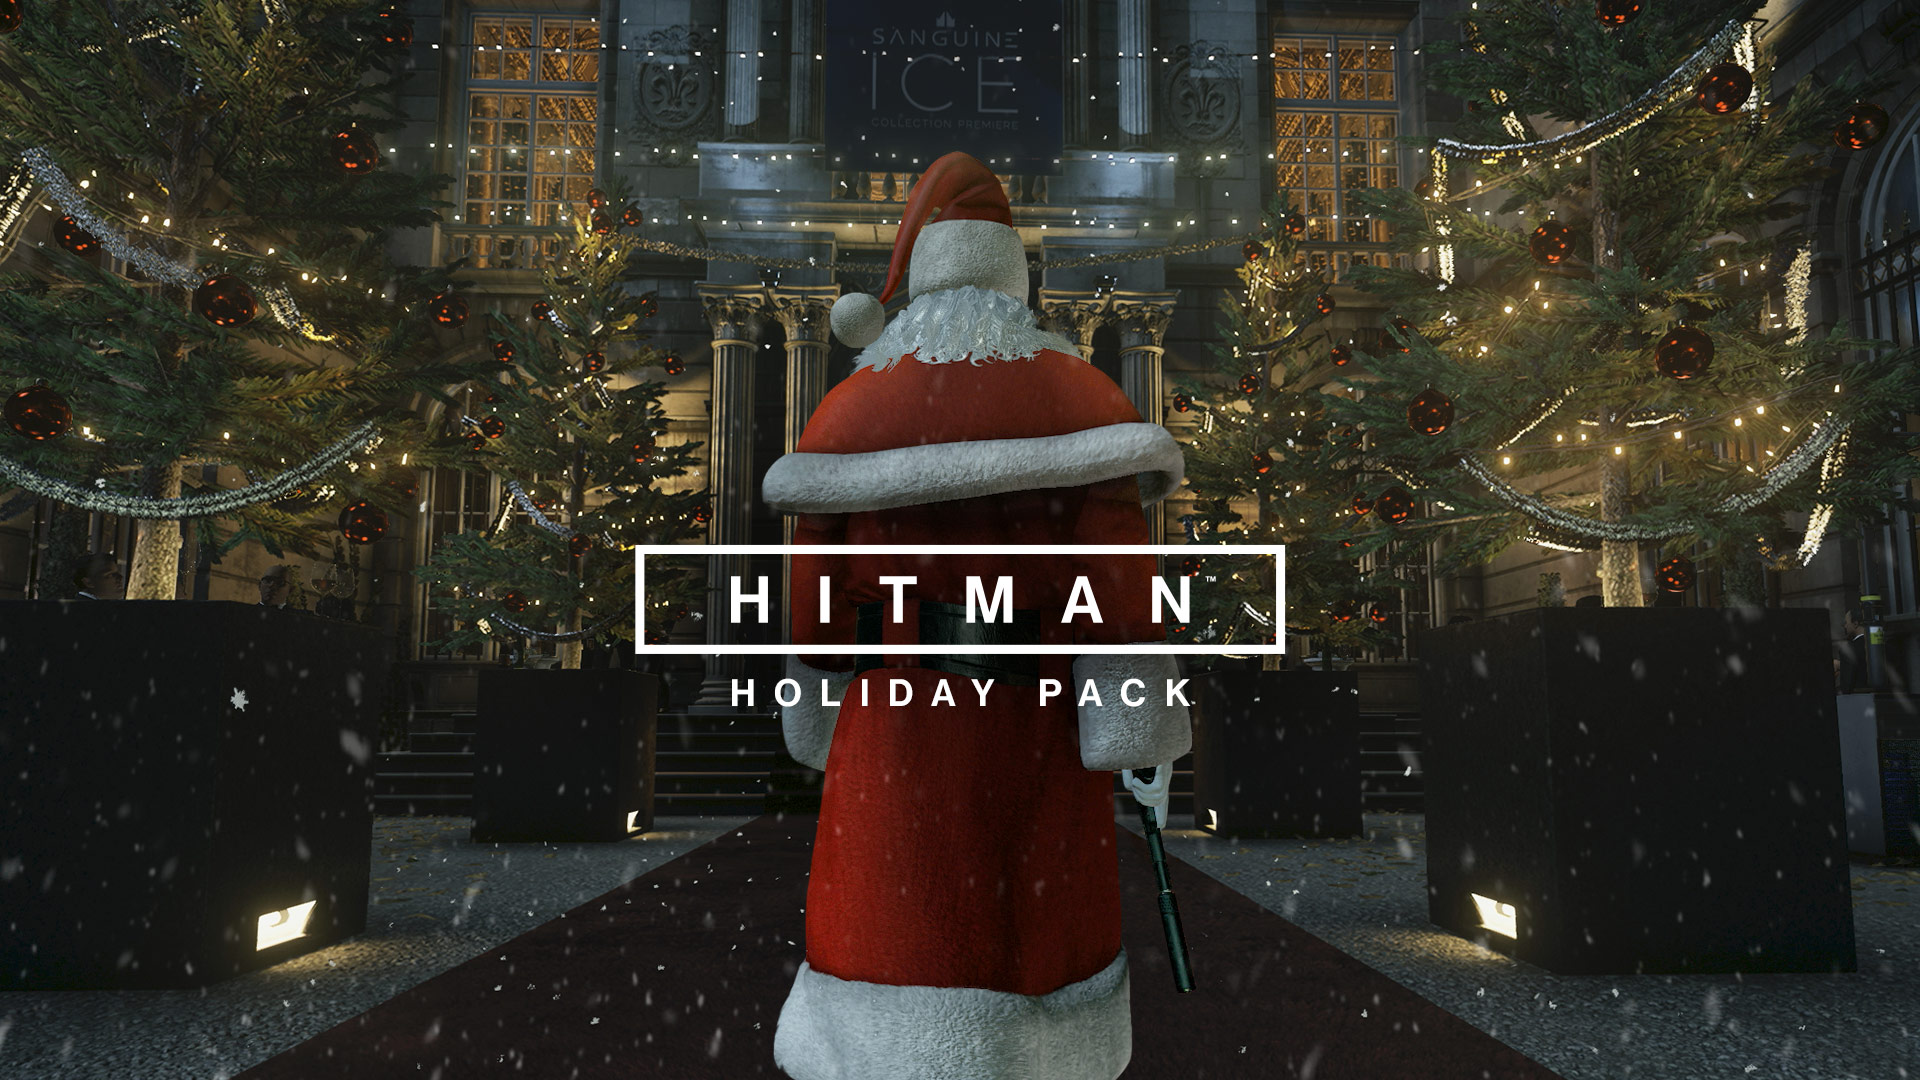 Hitman holidaypack free 5